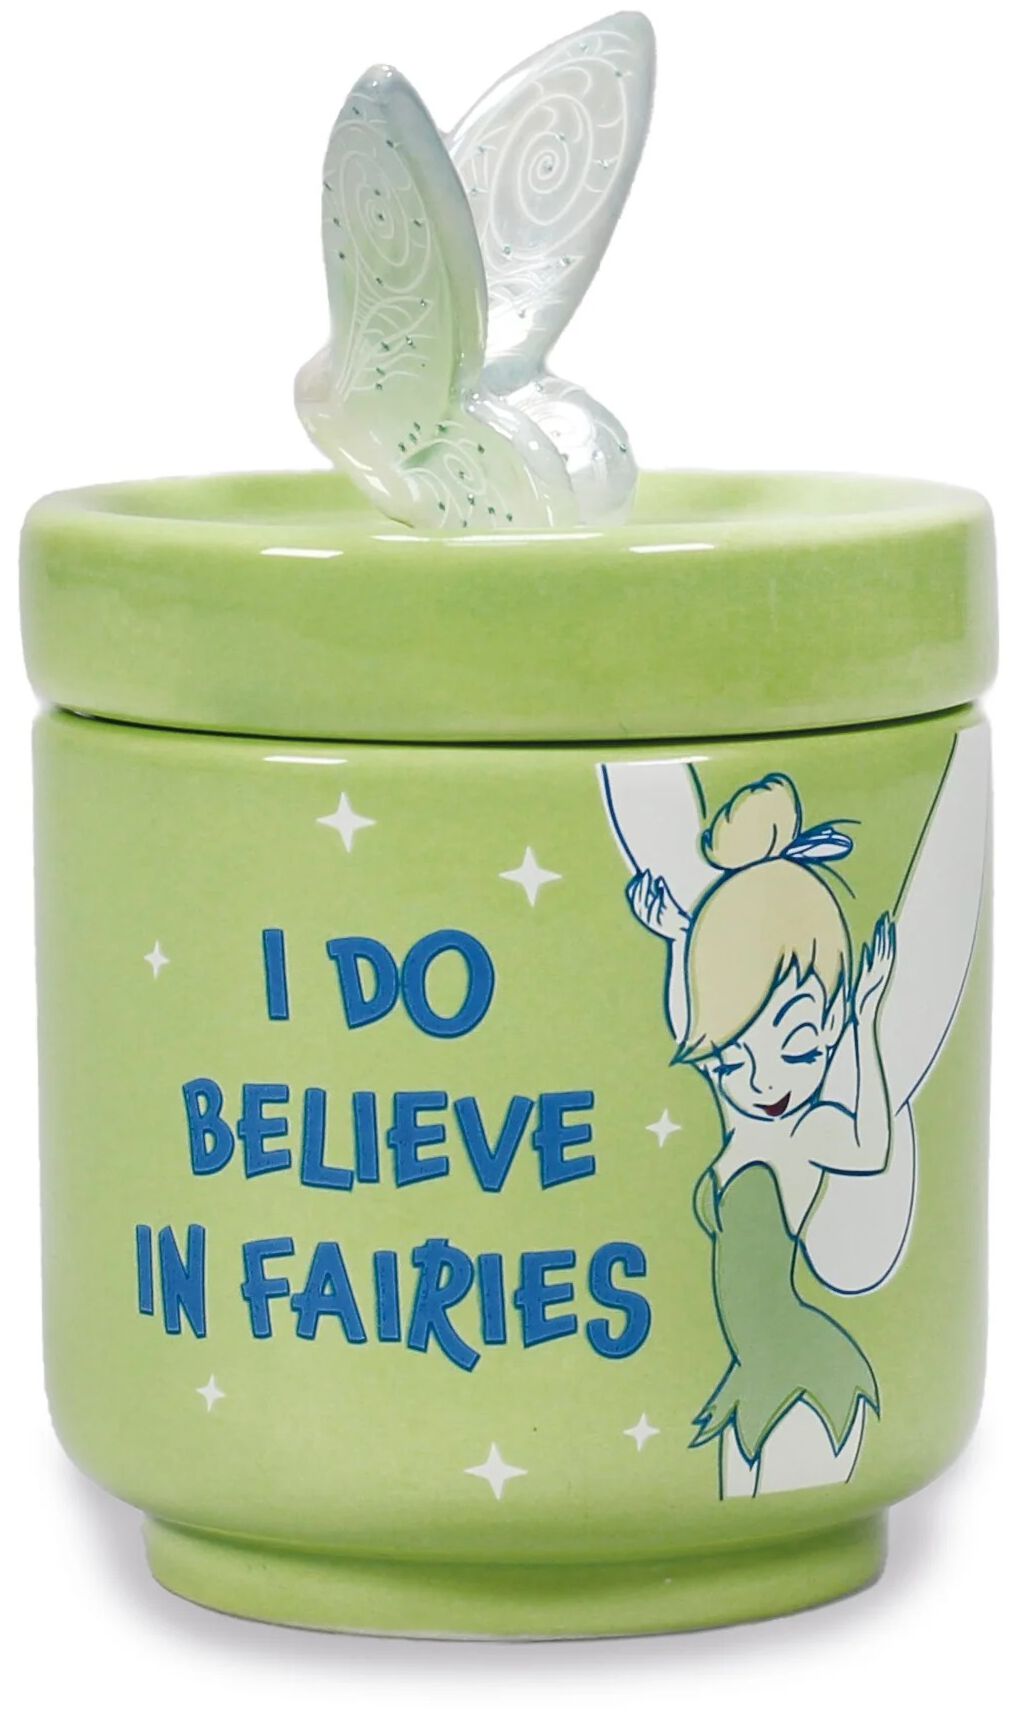 Peter Pan I Do Believe in Fairies Aufbewahrungsbox multicolor